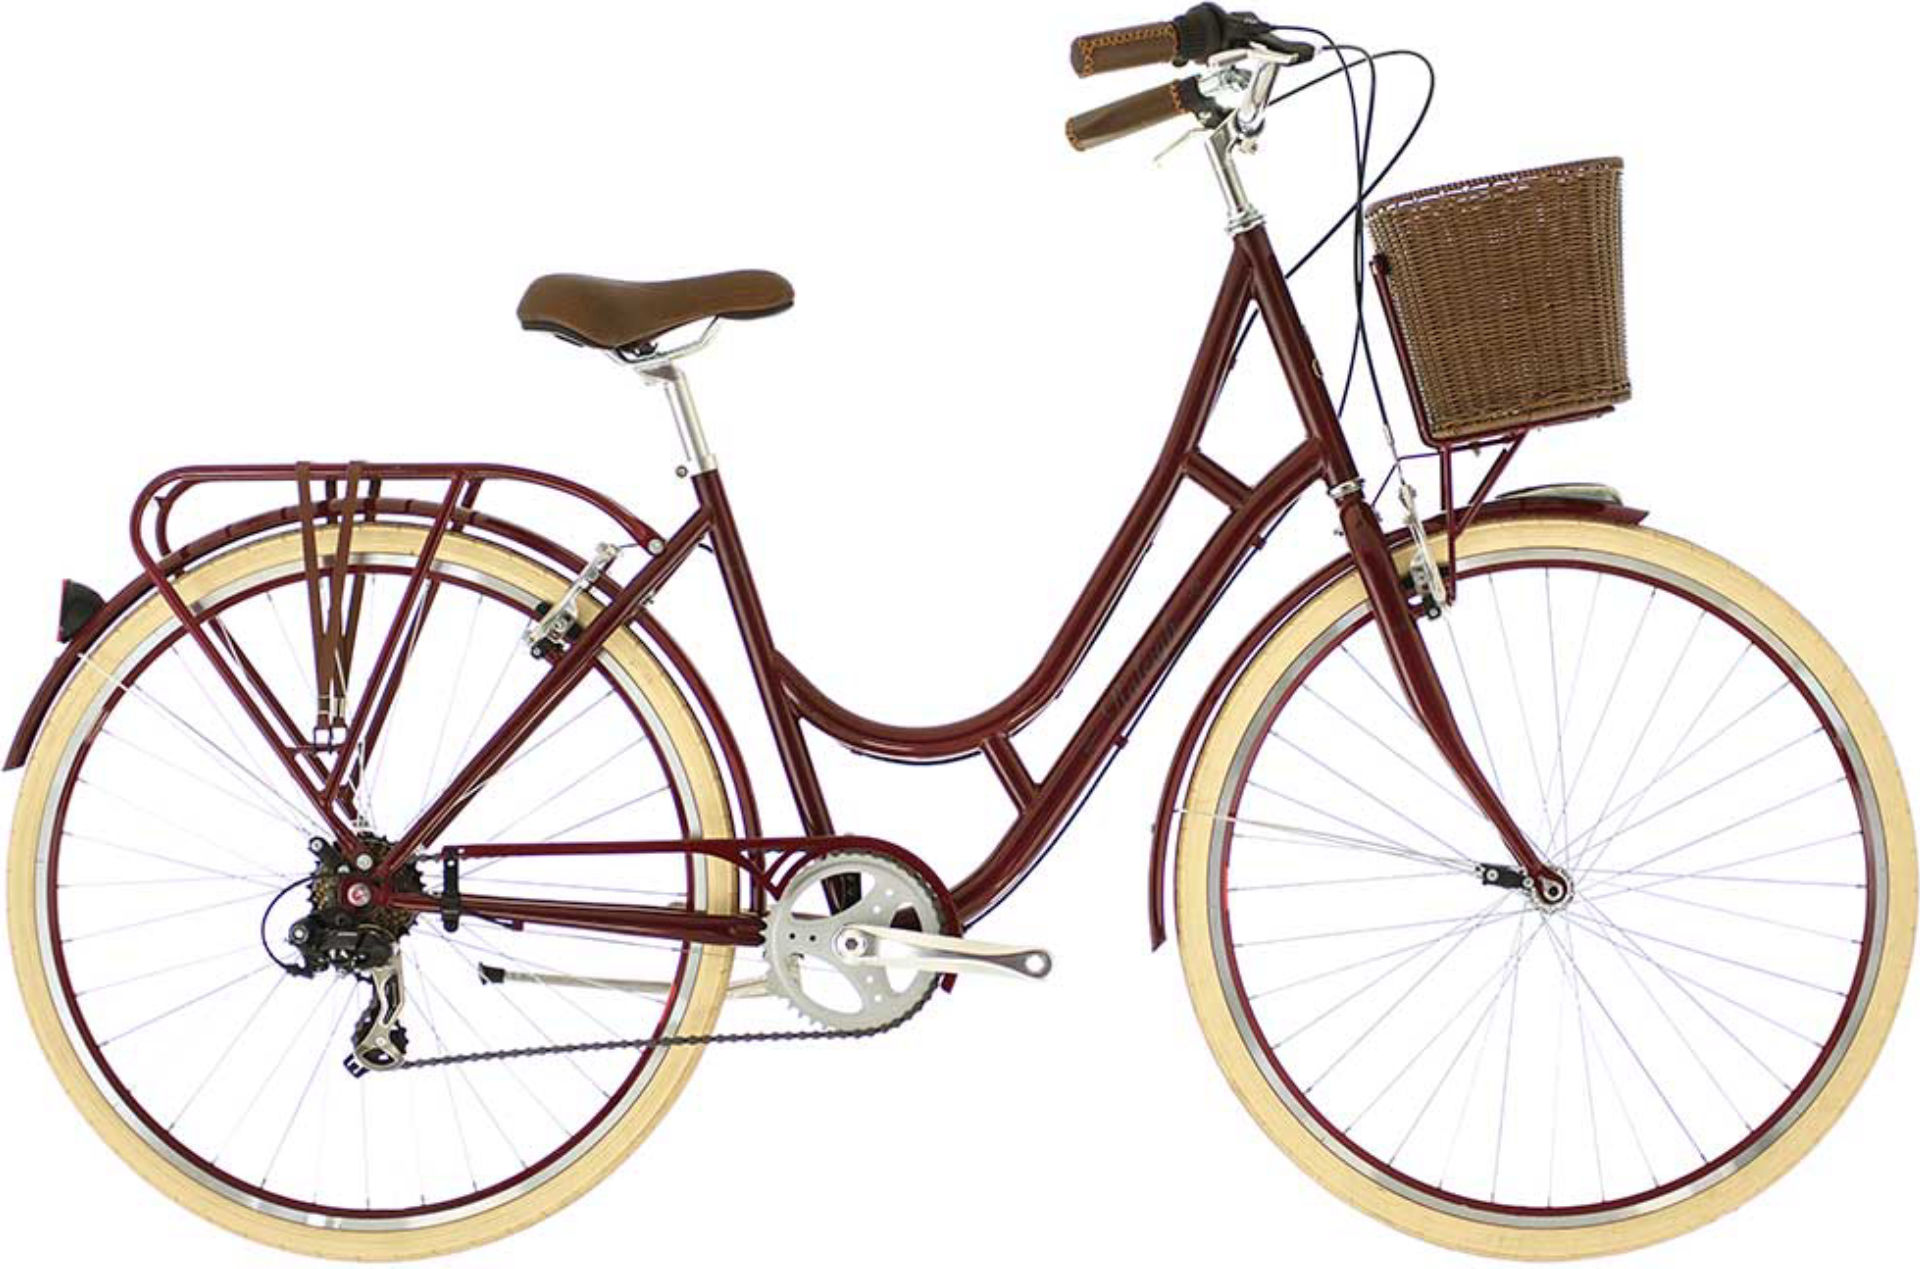 Классический гибрид. Велосипед Raleigh City 3. Dinos велосипед женский. Fashion 20 Classic Bike. Raleigh traveller.